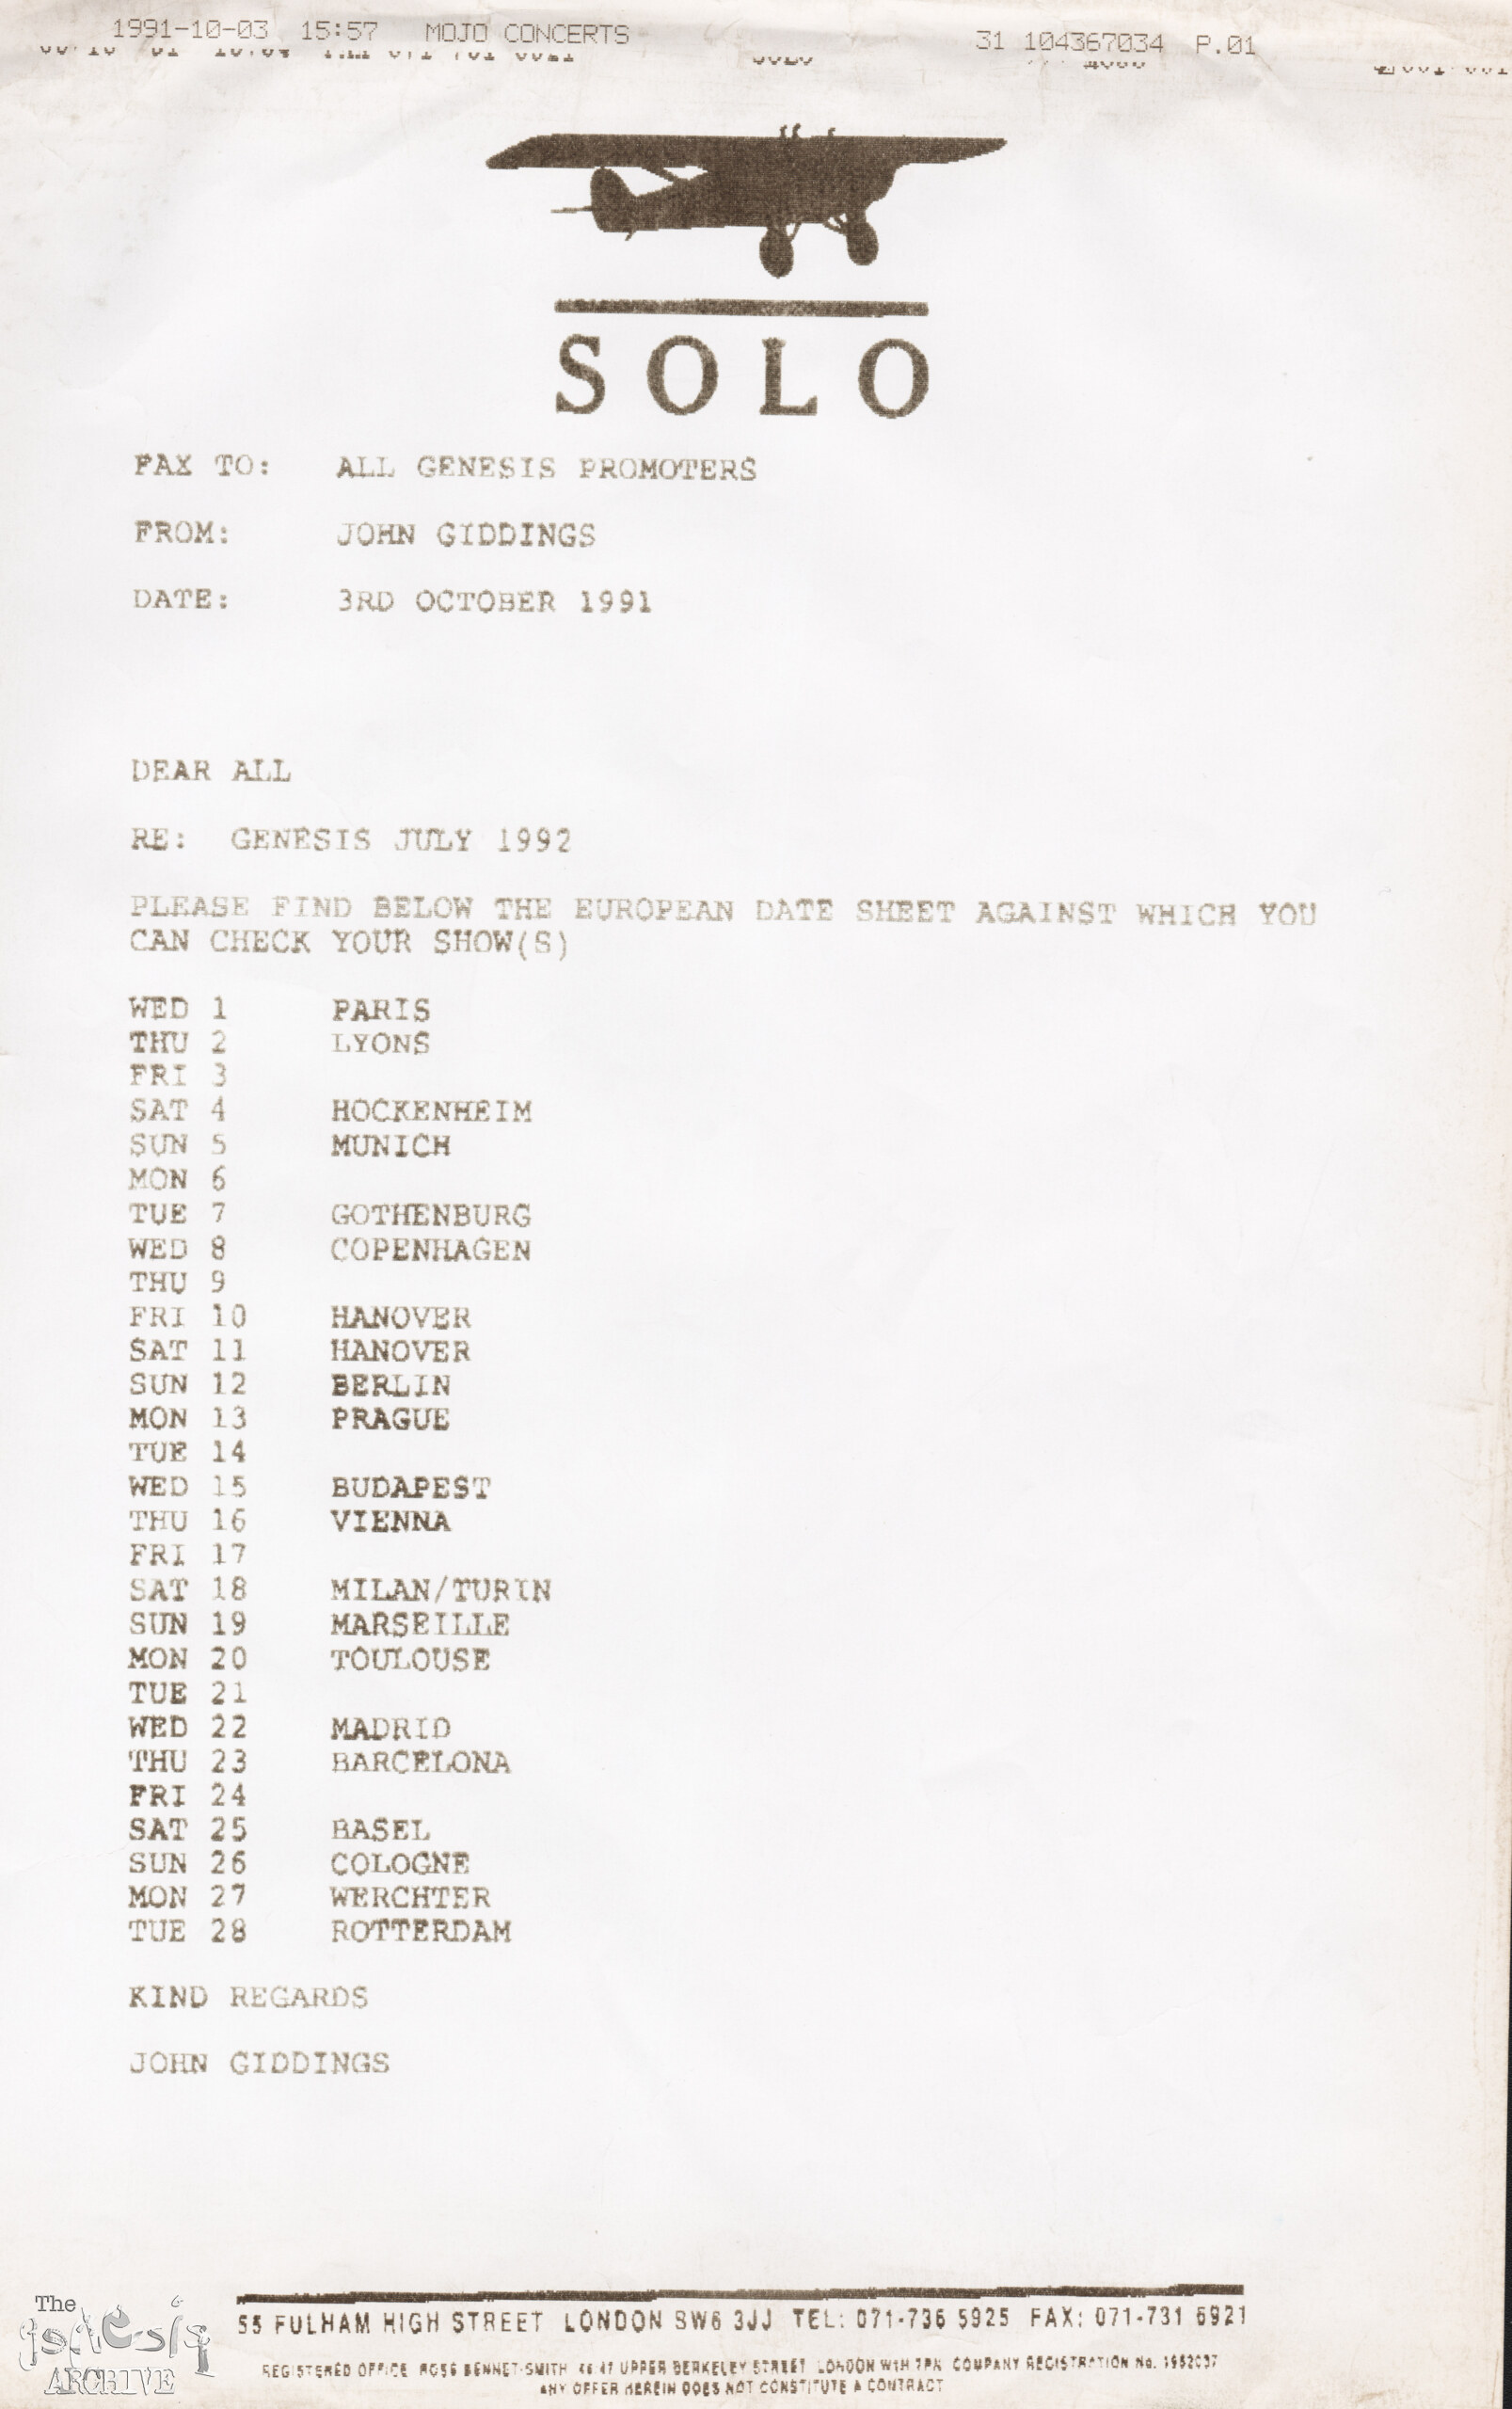 genesis 1985 tour dates